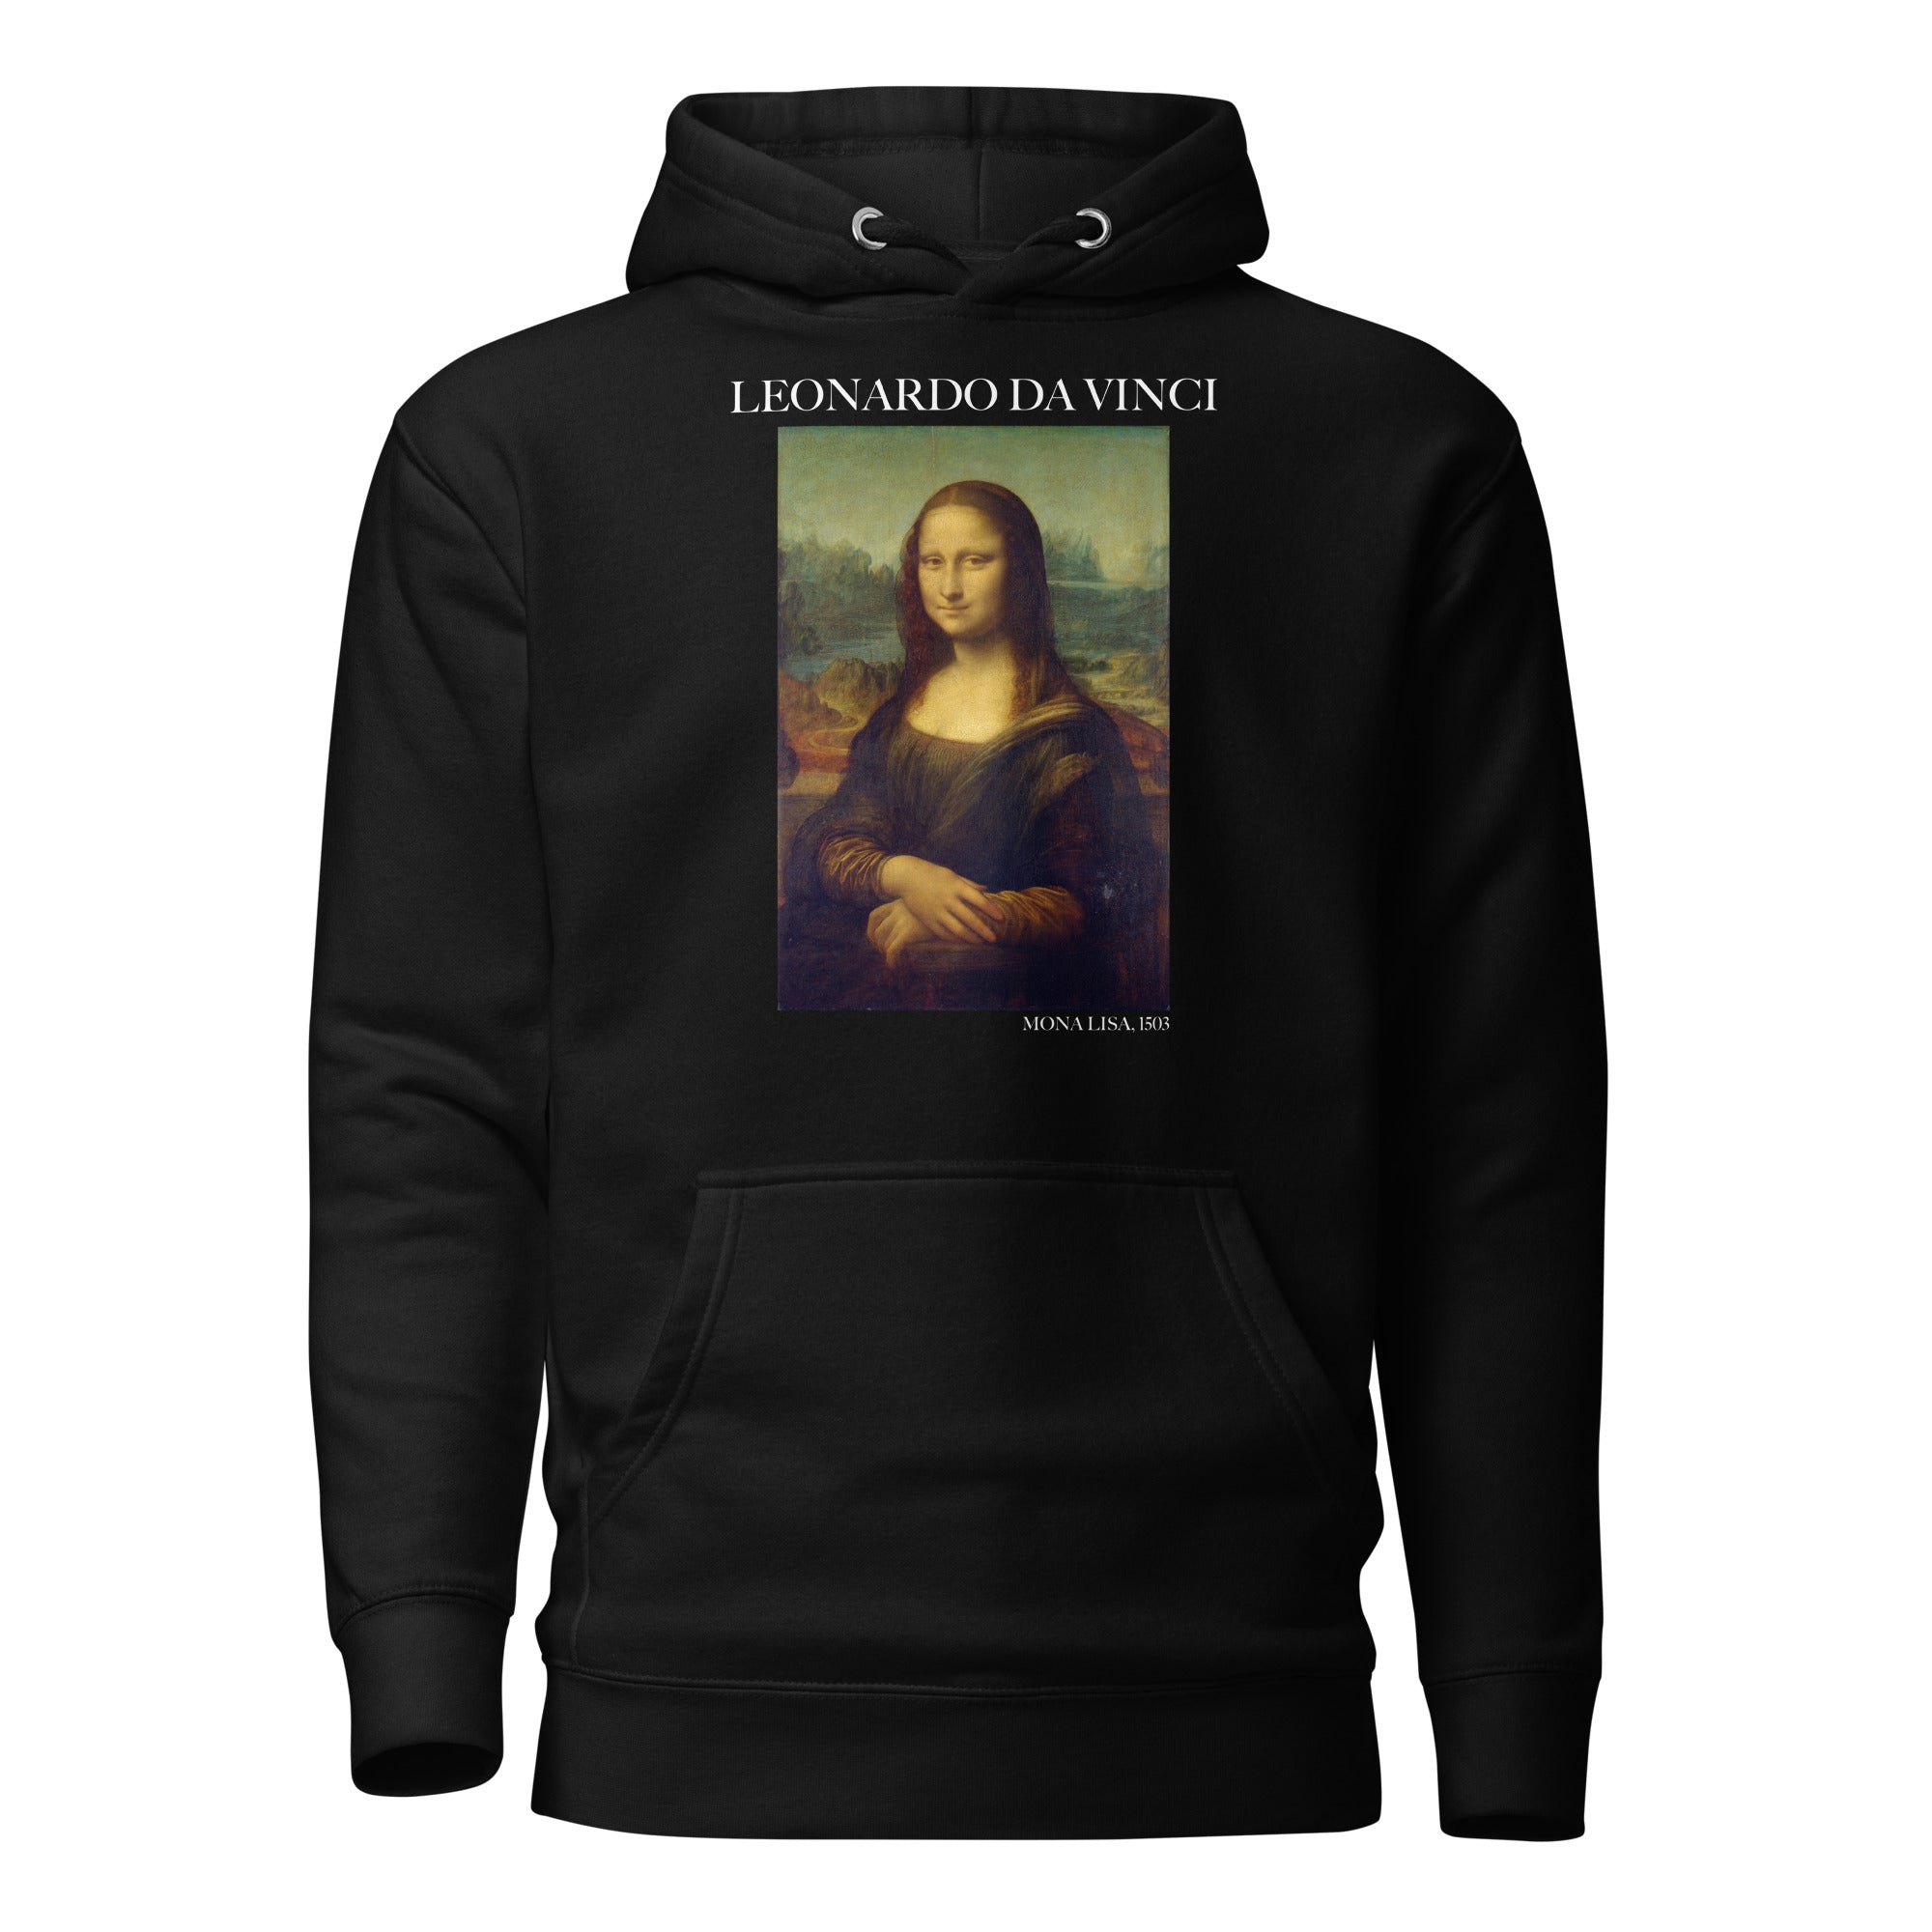 Kapuzenpullover mit berühmtem Gemälde „Mona Lisa“ von Leonardo da Vinci | Unisex-Kapuzenpullover mit Premium-Kunstmotiv